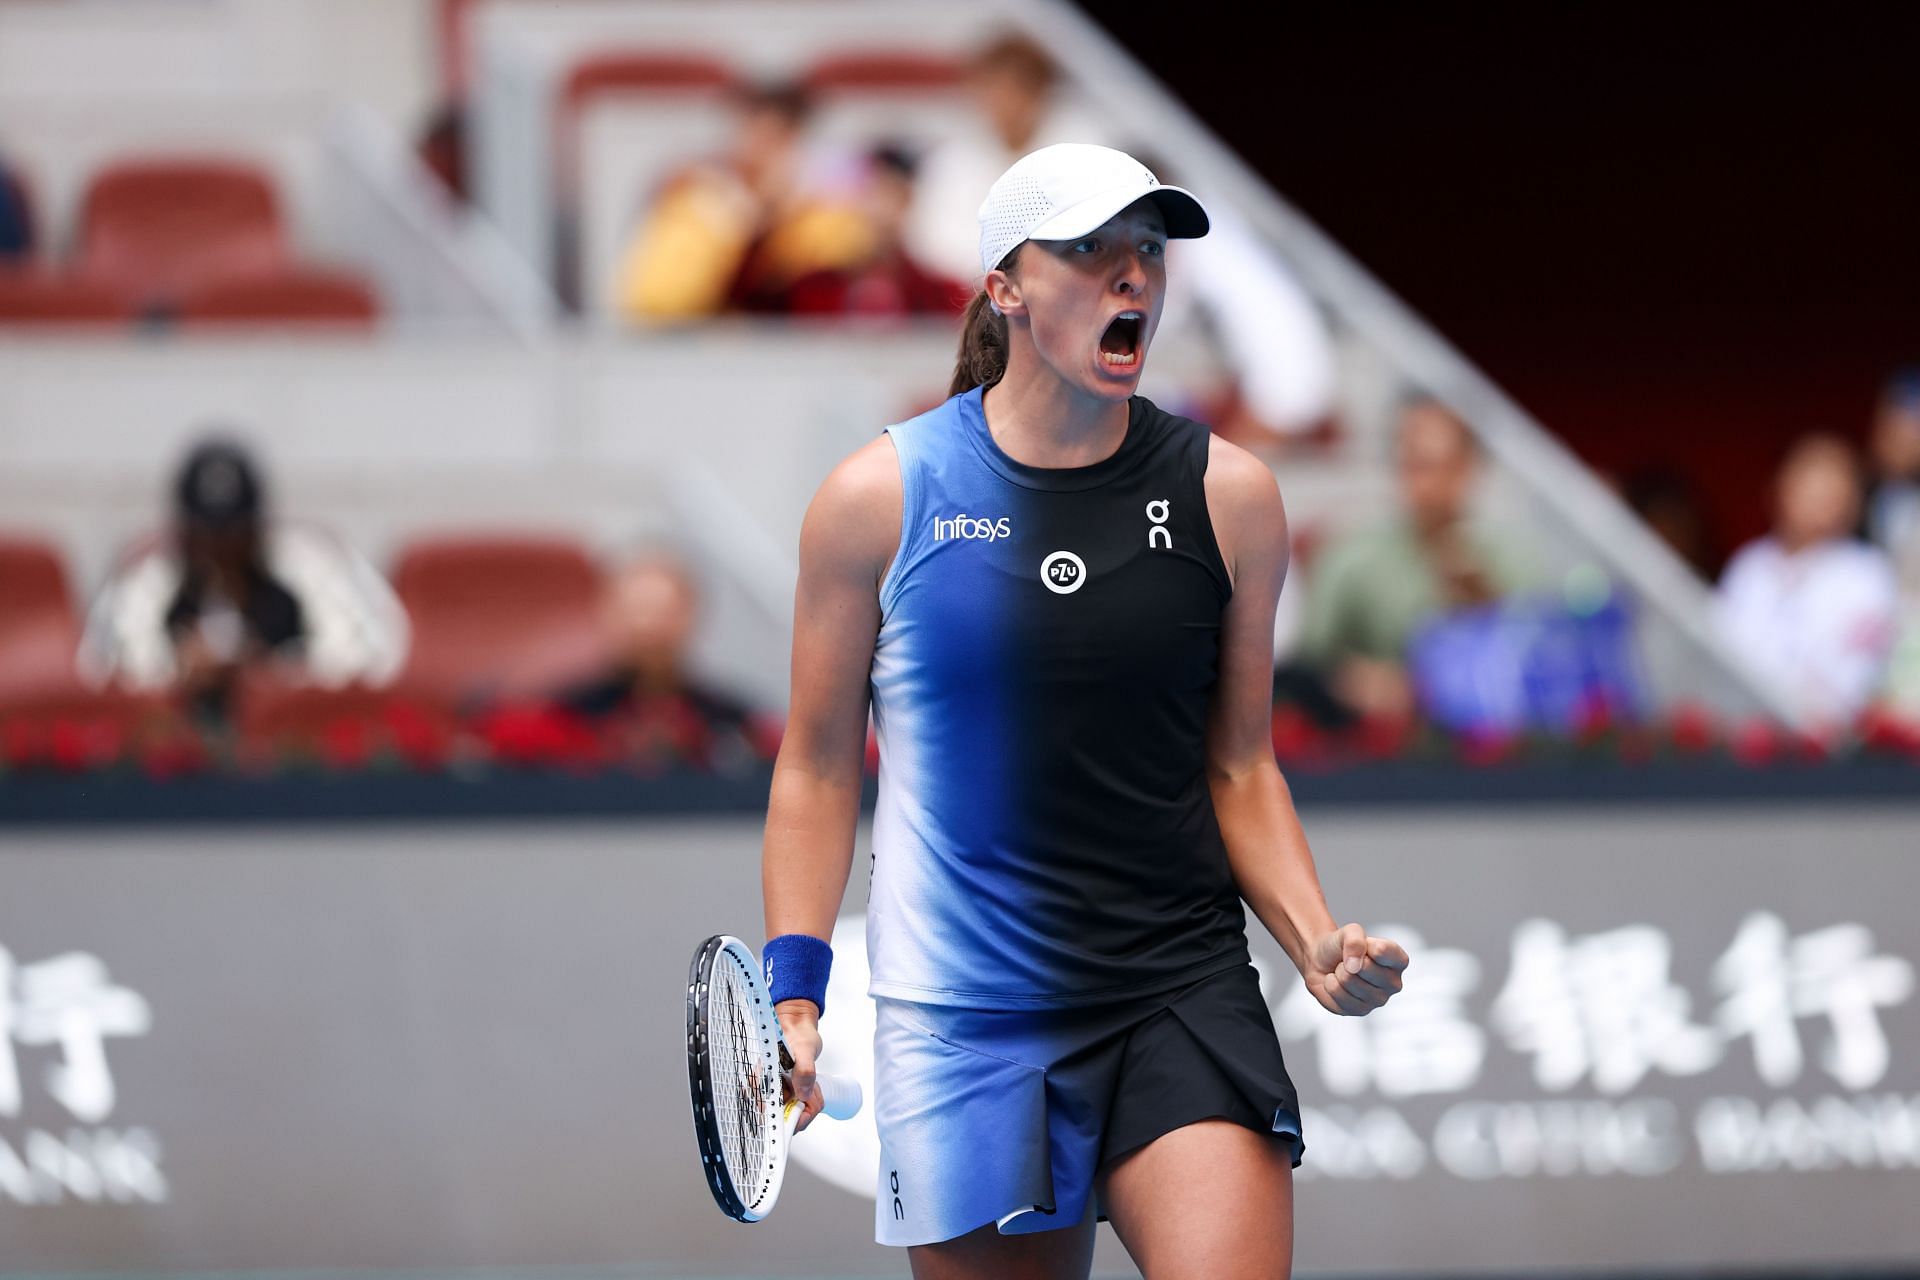 WTA 1000 de Pequim: Samsonova x Swiatek na final - bet365